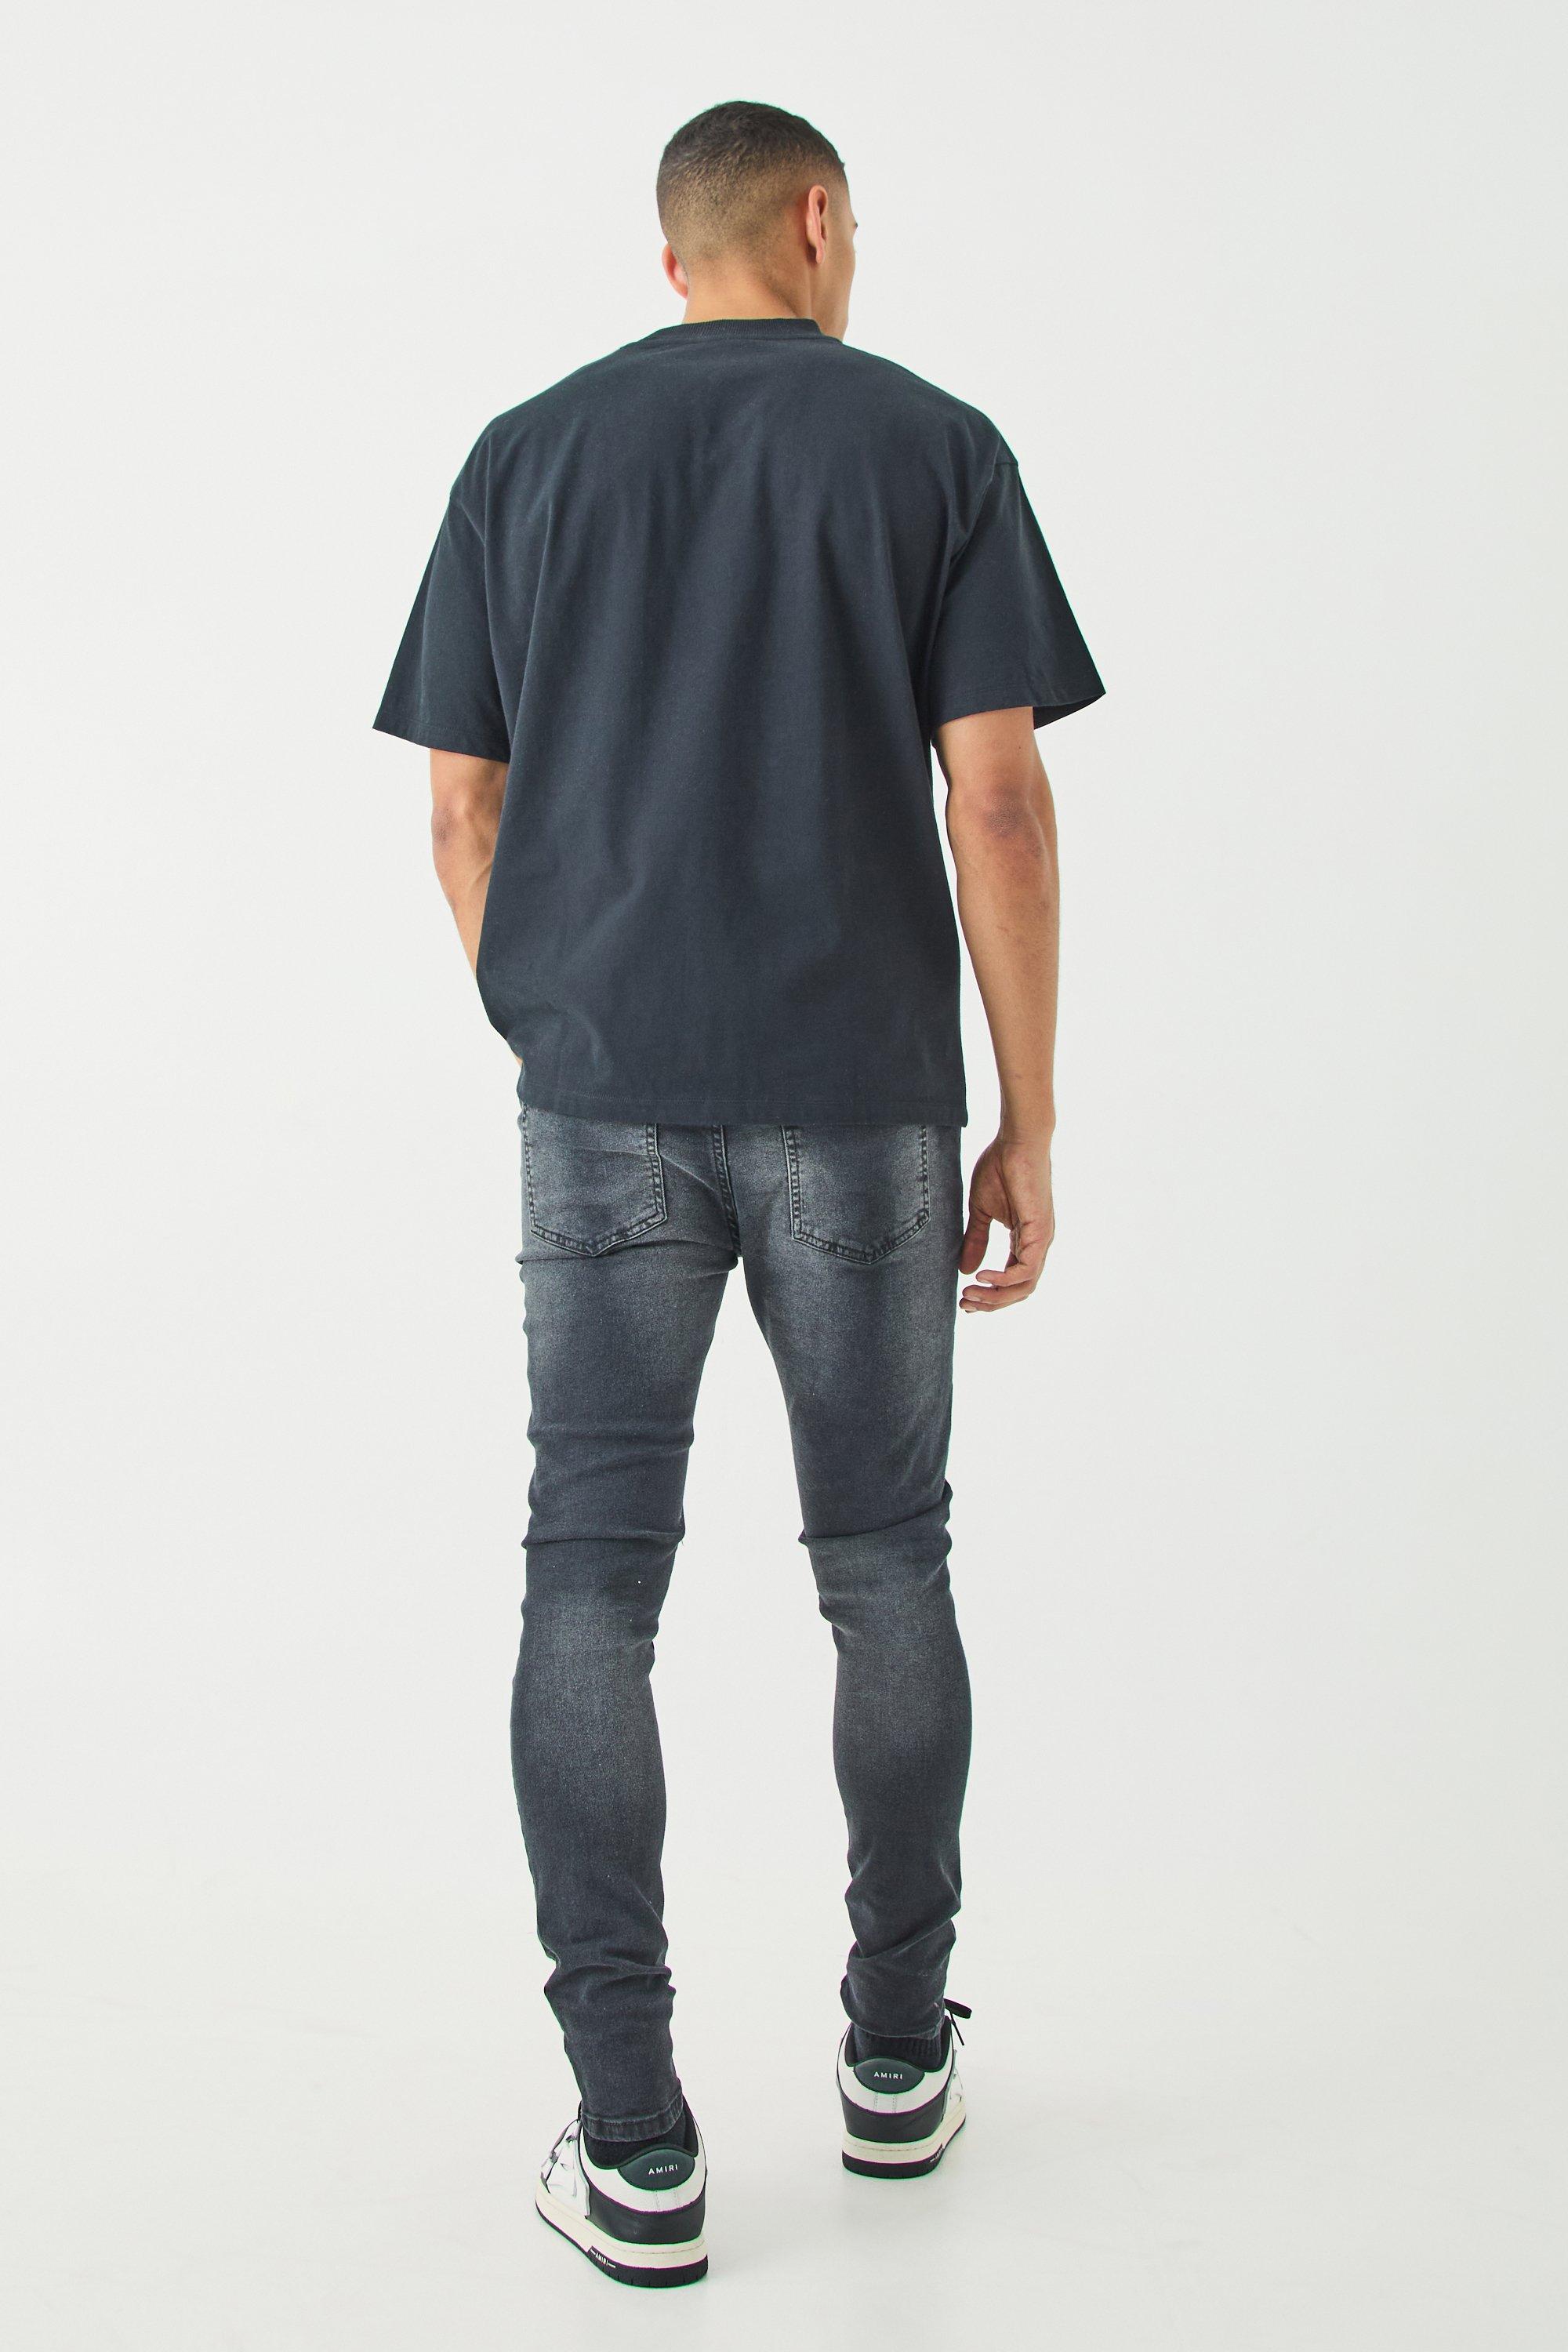 Black Denim, Black Jeans, Ripped, Skinny & More